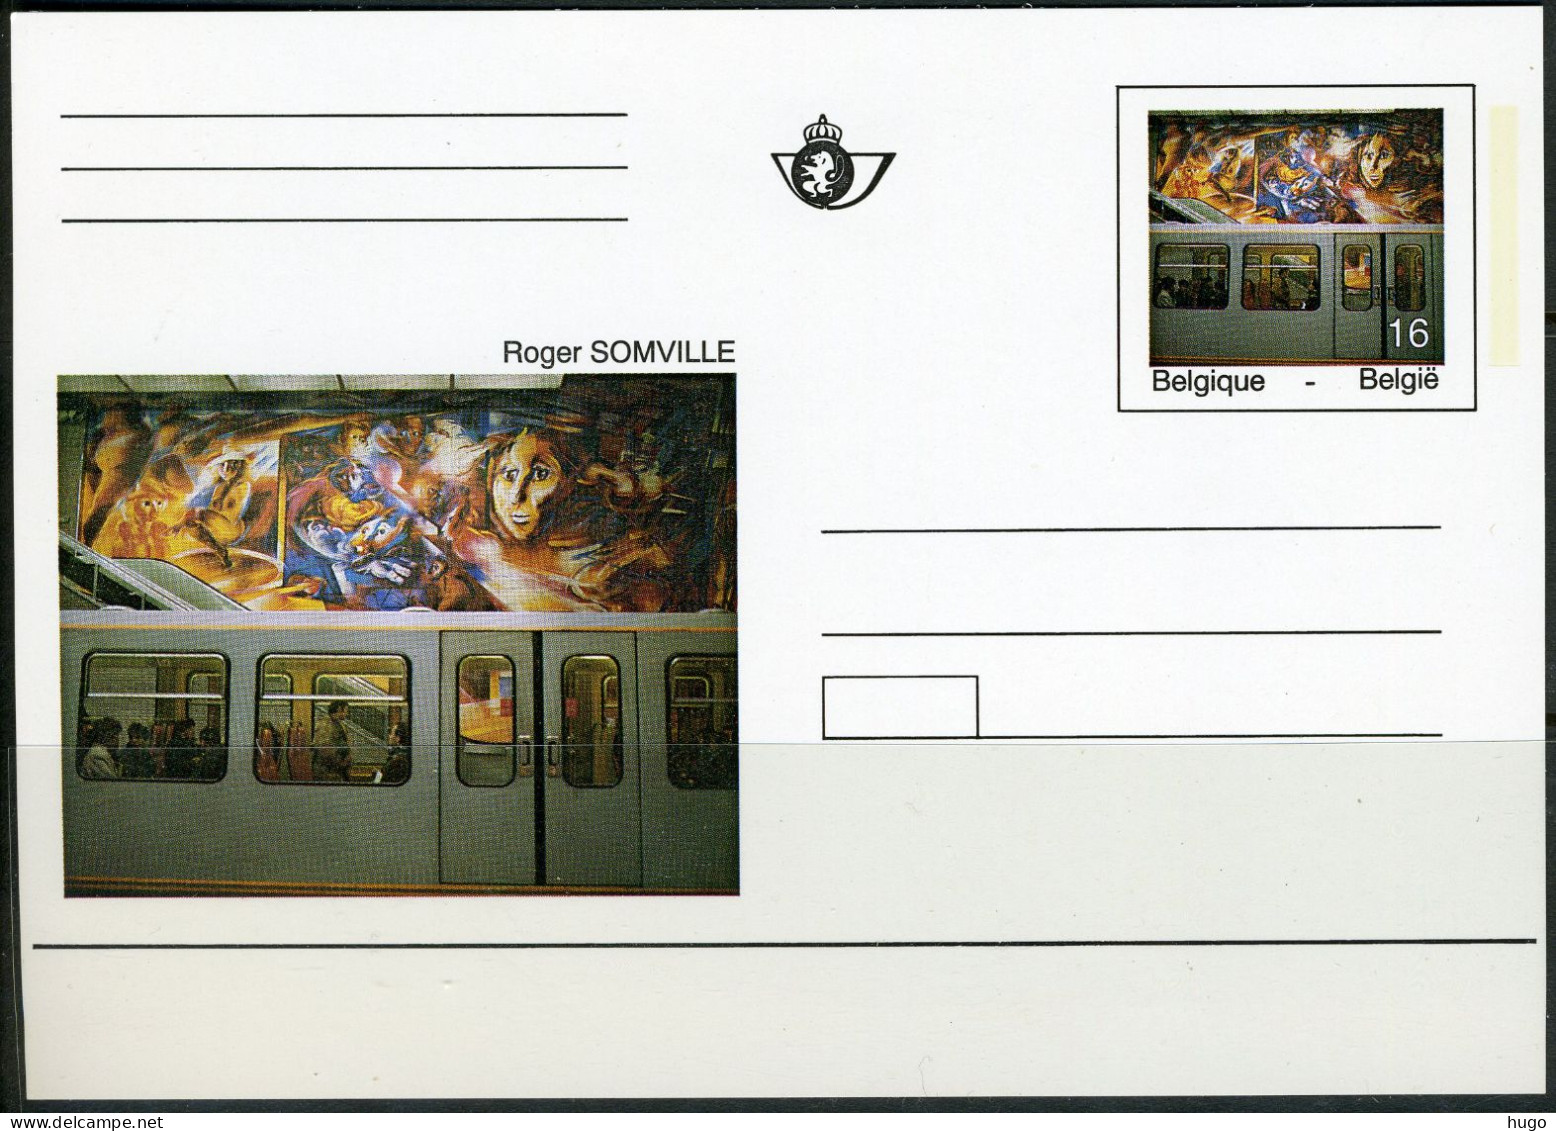 (B) BK46 1994 - Kunstwerken Uit De Brusselse Metro - Cartes Postales Illustrées (1971-2014) [BK]